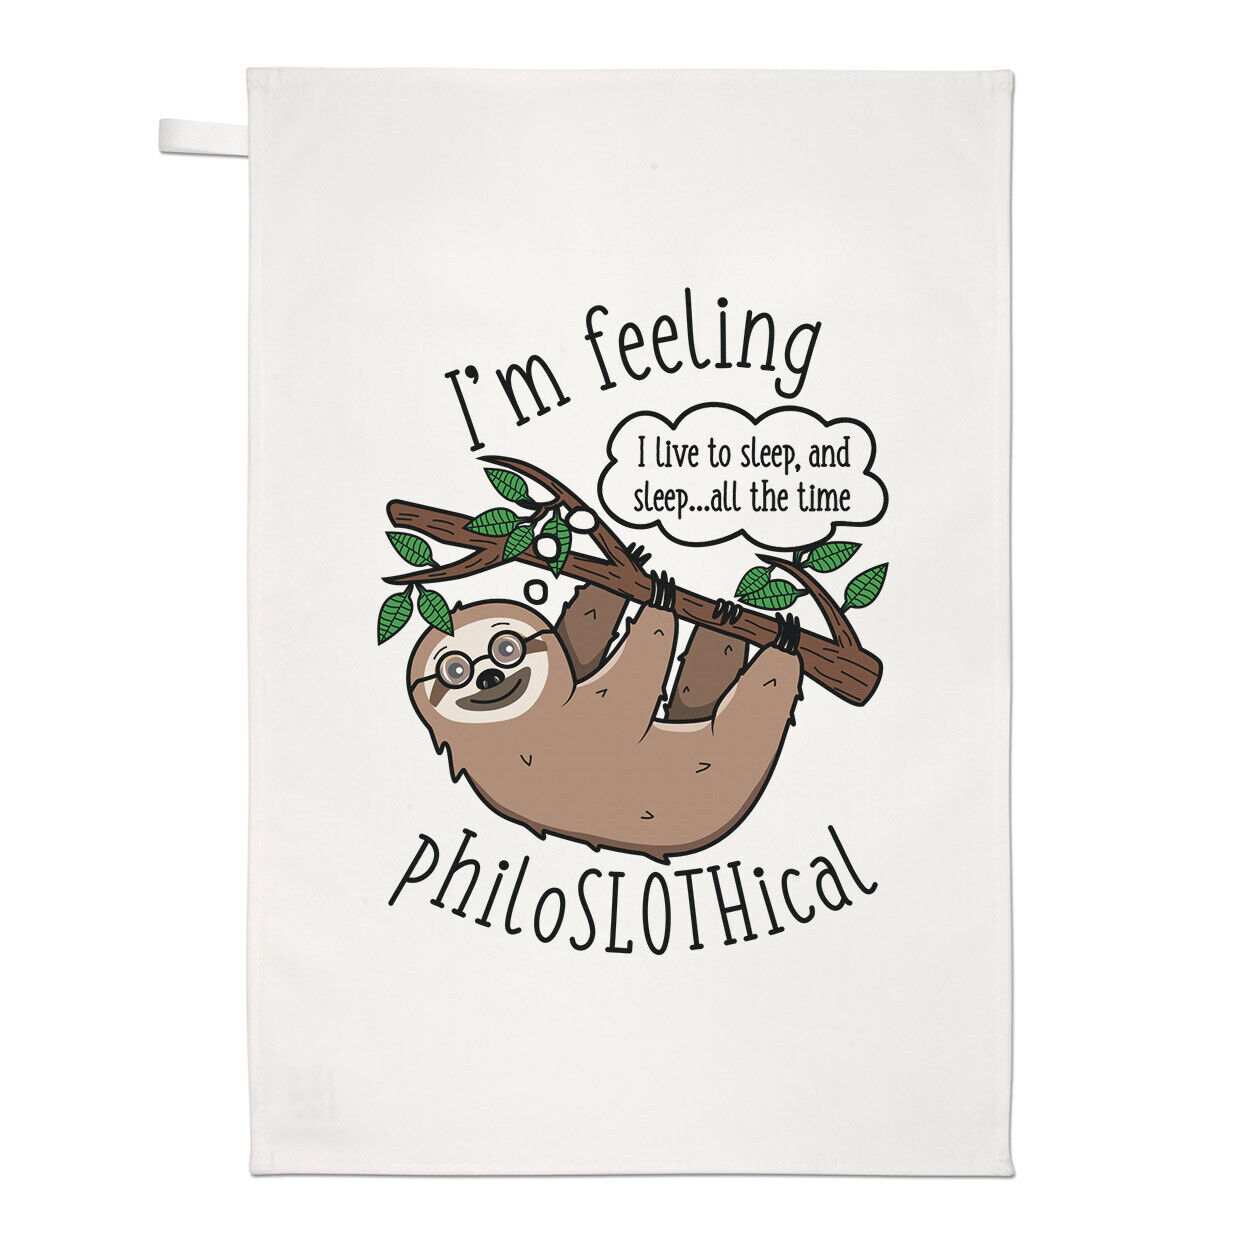 Feeling Philoslothical Sloth Tea Towel Dish Cloth Joke Funny Animal Pun  Lazy 5057698271545 | eBay